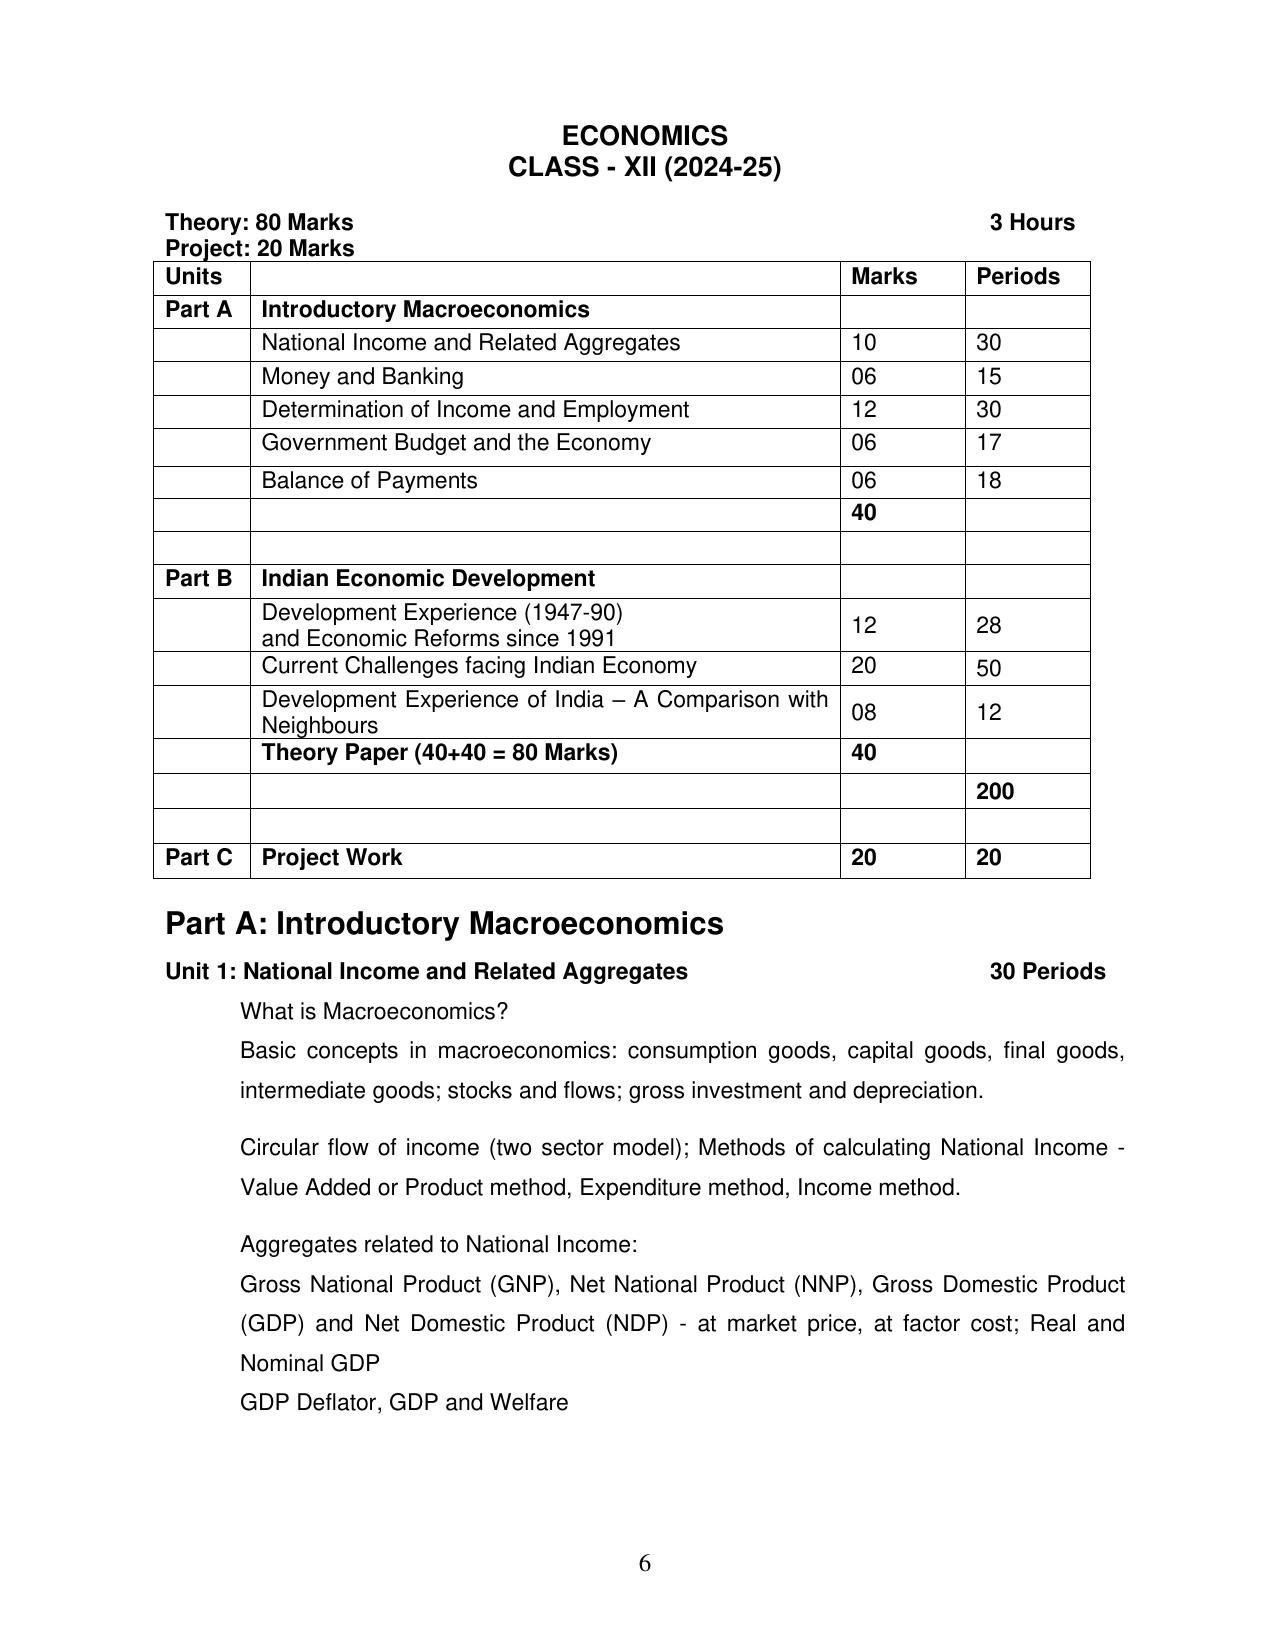 CBSE Class 11 & 12 Syllabus 2022-23 - Economics - Page 6